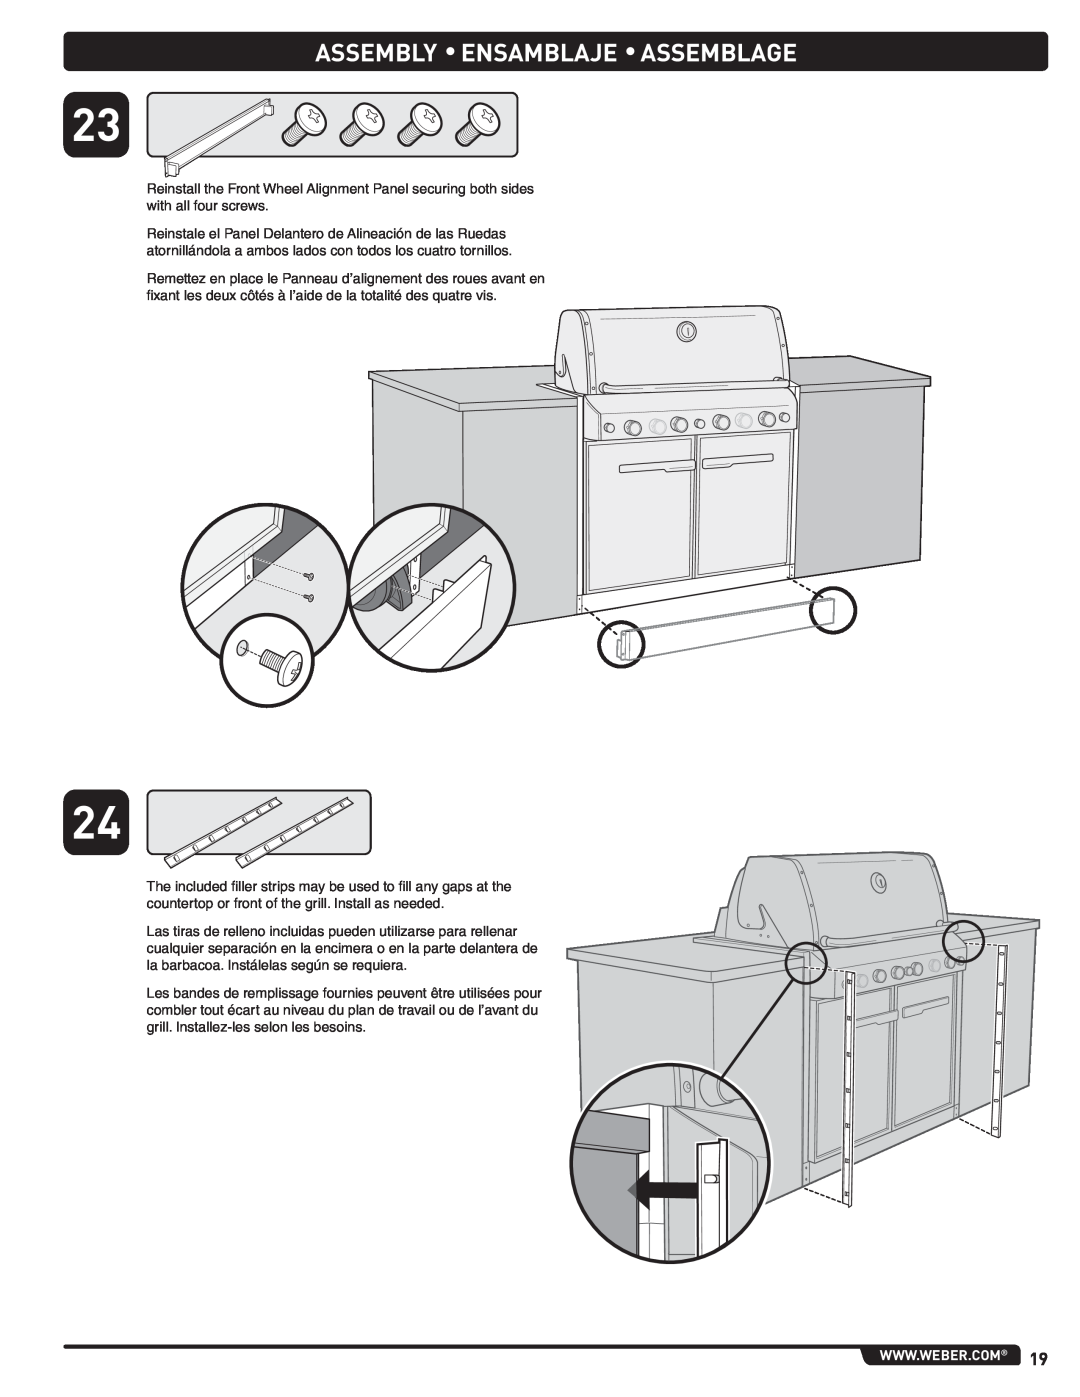 Weber 56576, Summit Gas Grill manual Assembly Ensamblaje Assemblage 